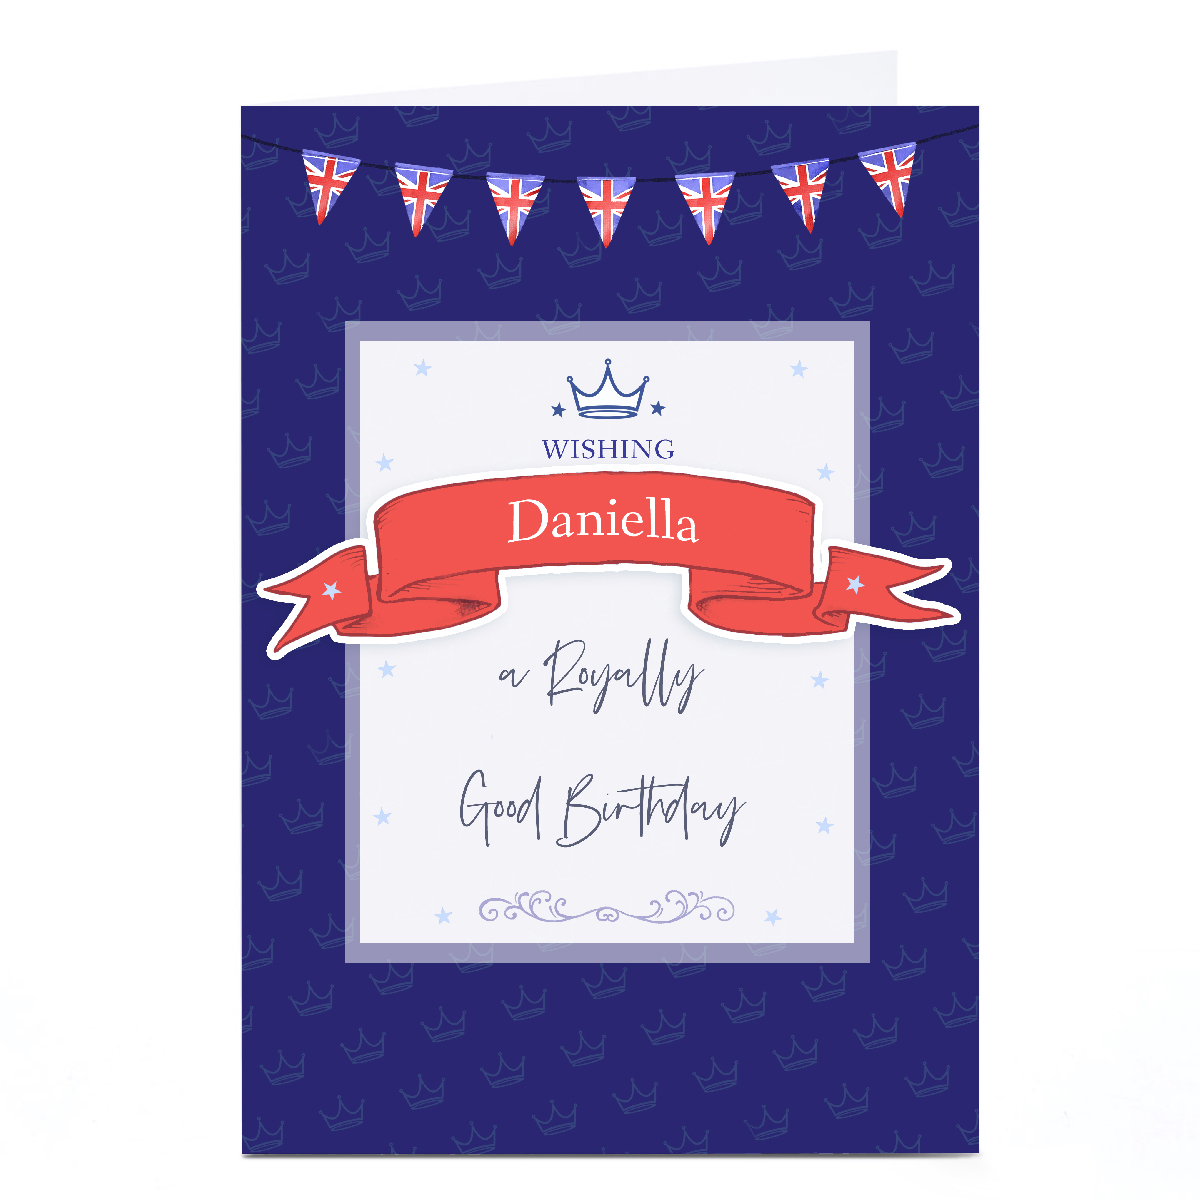 Personalised Birthday Card - Royally Good Birthday